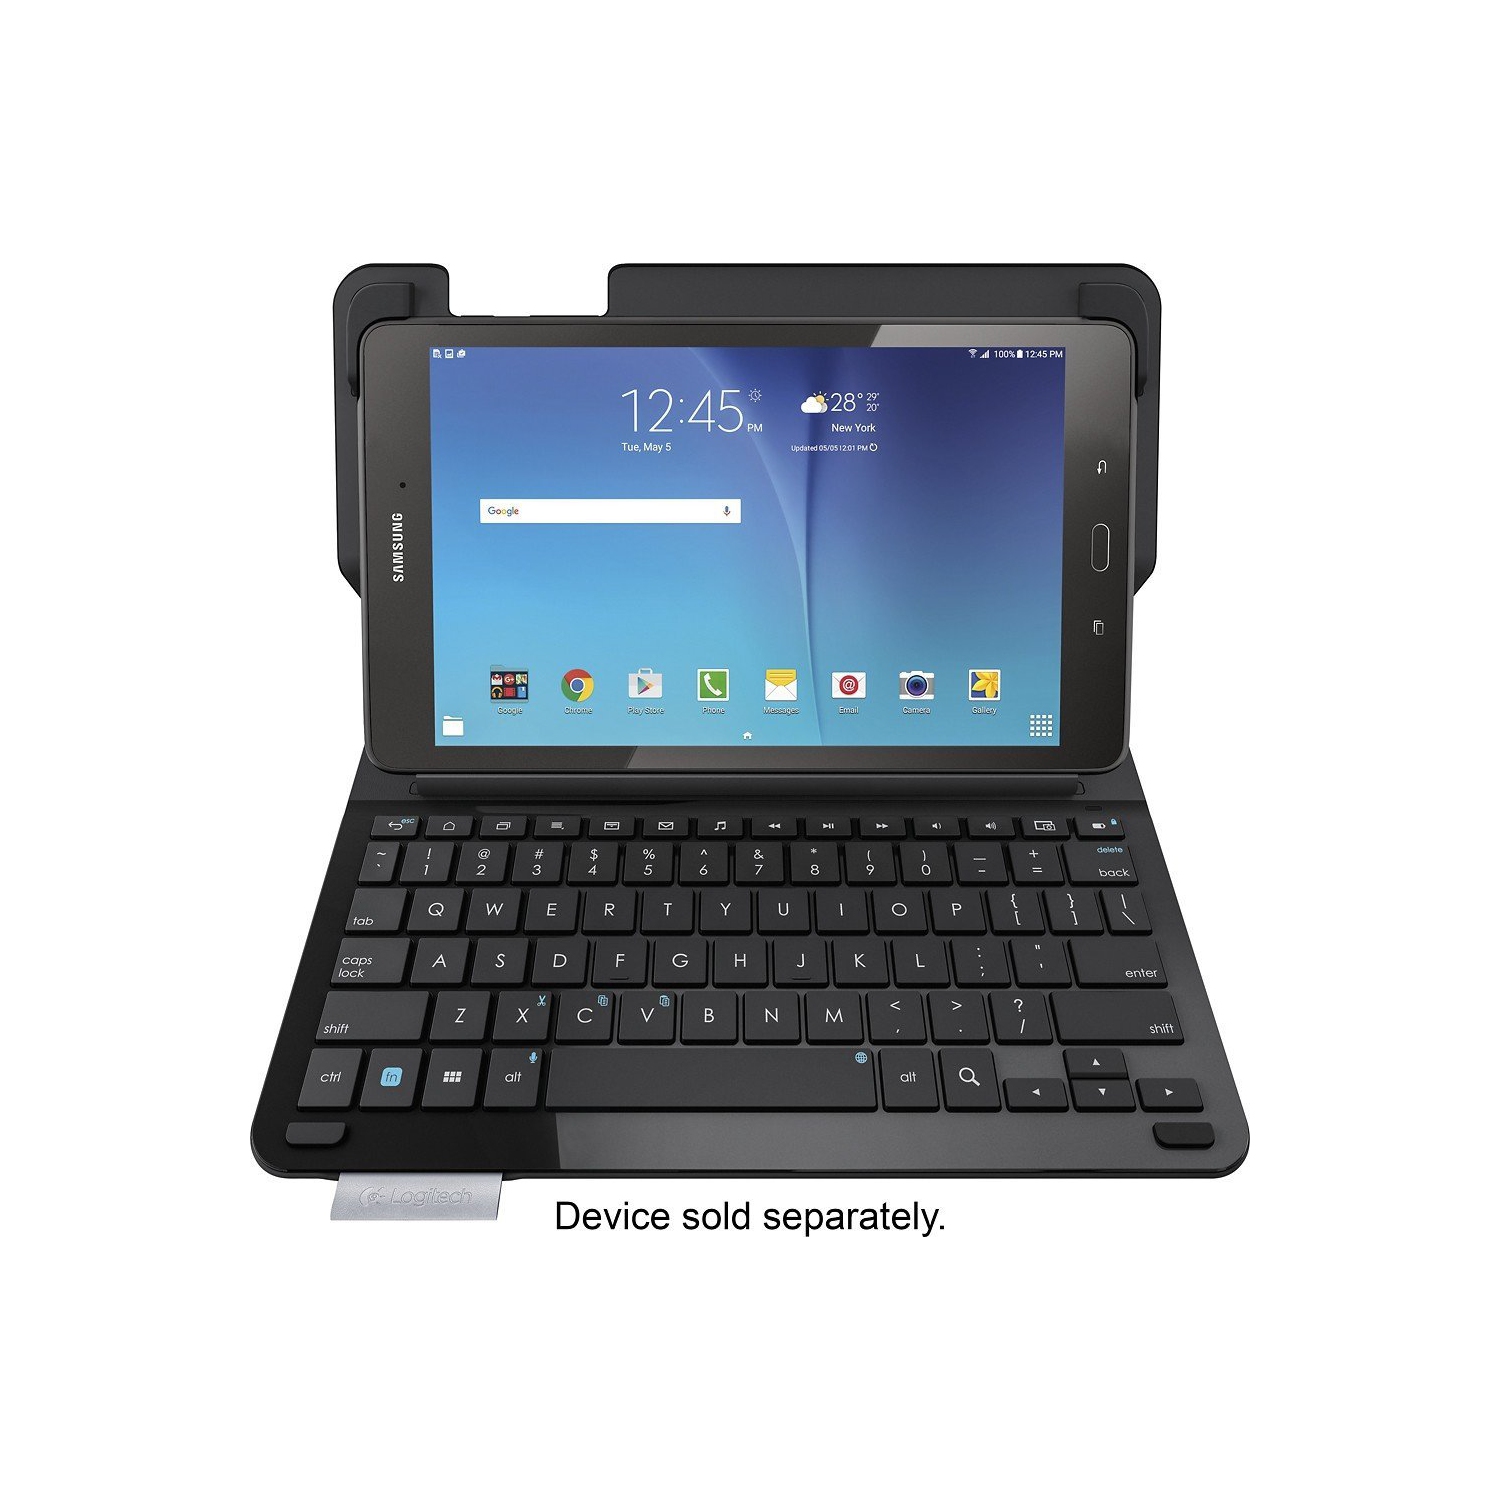 Refurbished (Good) - Logitech - Type S Keyboard Folio Case for Samsung Galaxy Tab E 9.6 - Model: 920-008161